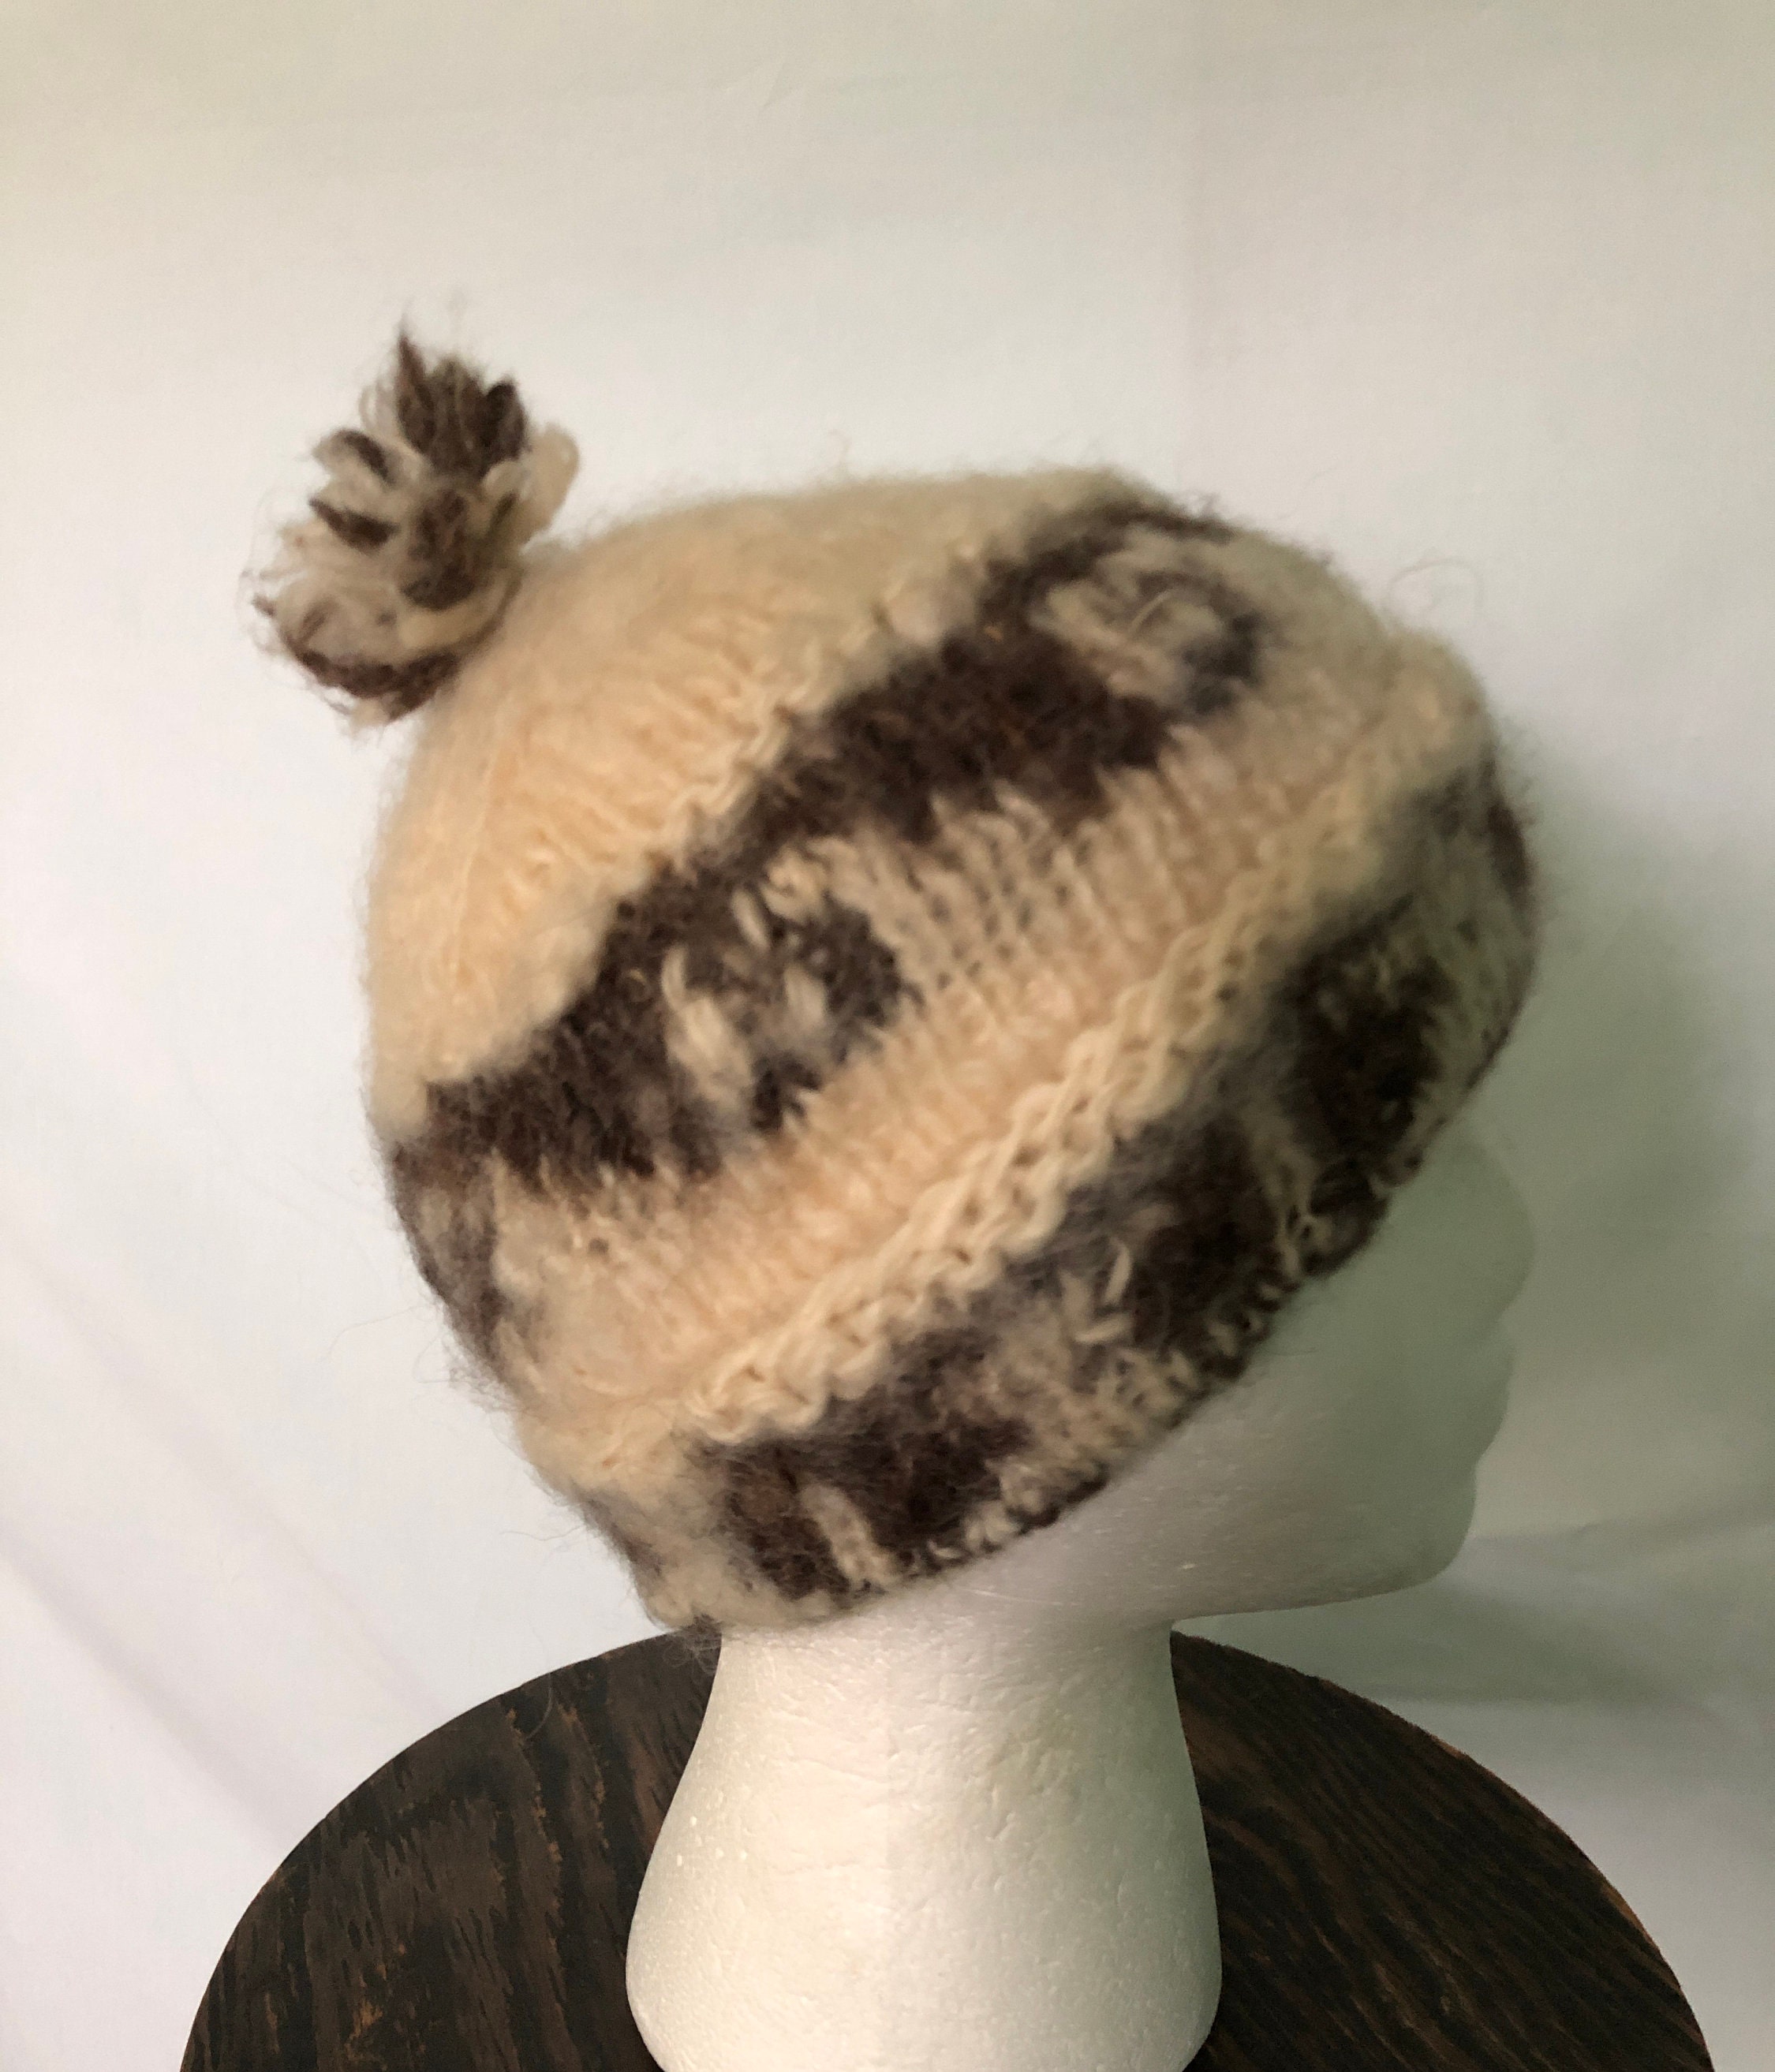 Brown Baby Alpaca Yarn for Crocheting or Knitting/ INDIECITA DK